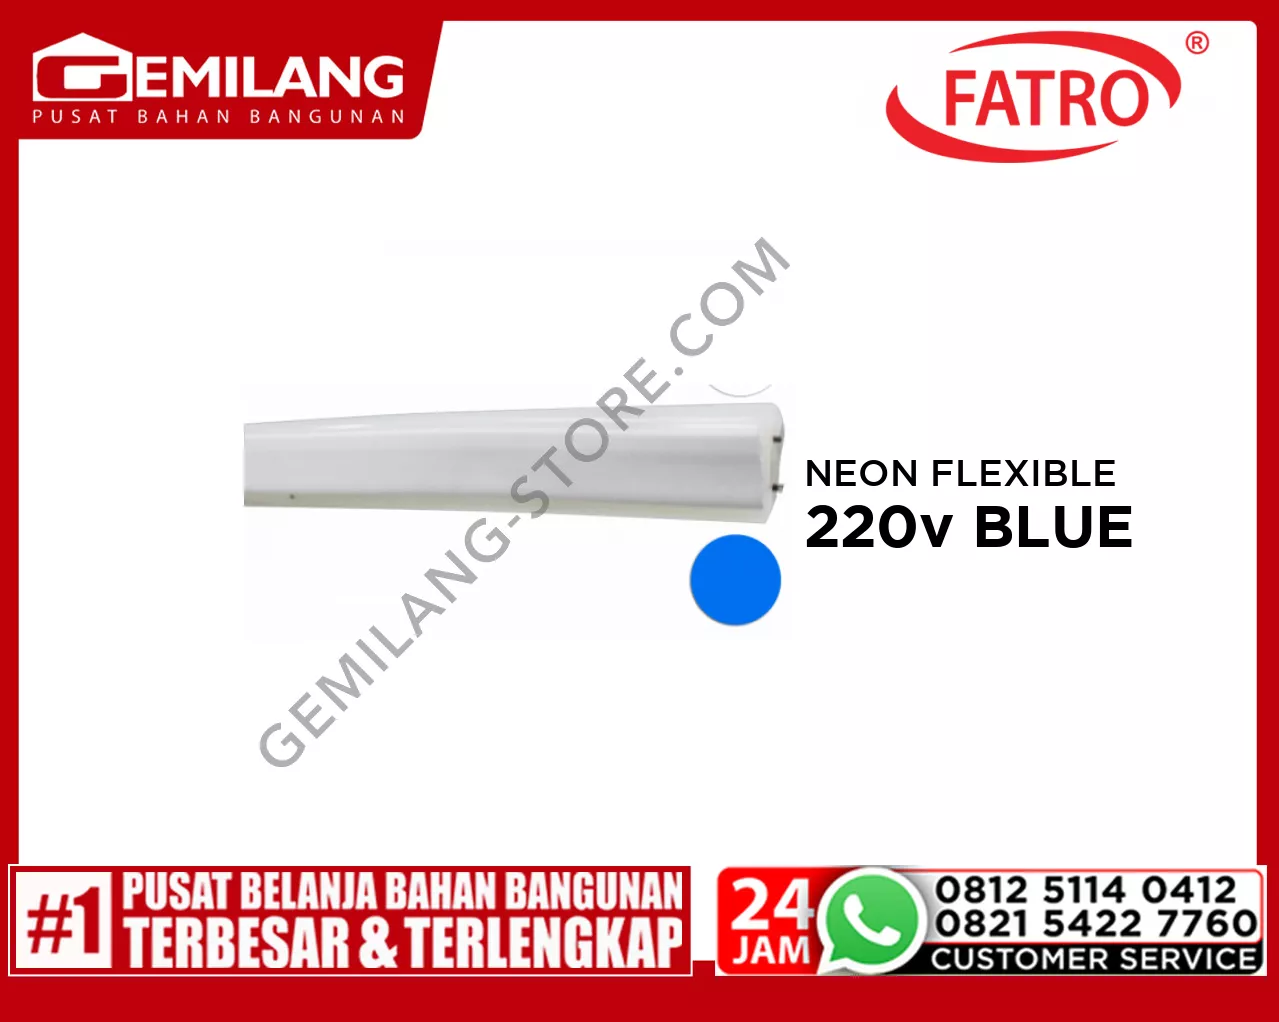 FATRO NEON FLEXIBLE SA 3560 220v BLUE 100m/mtr